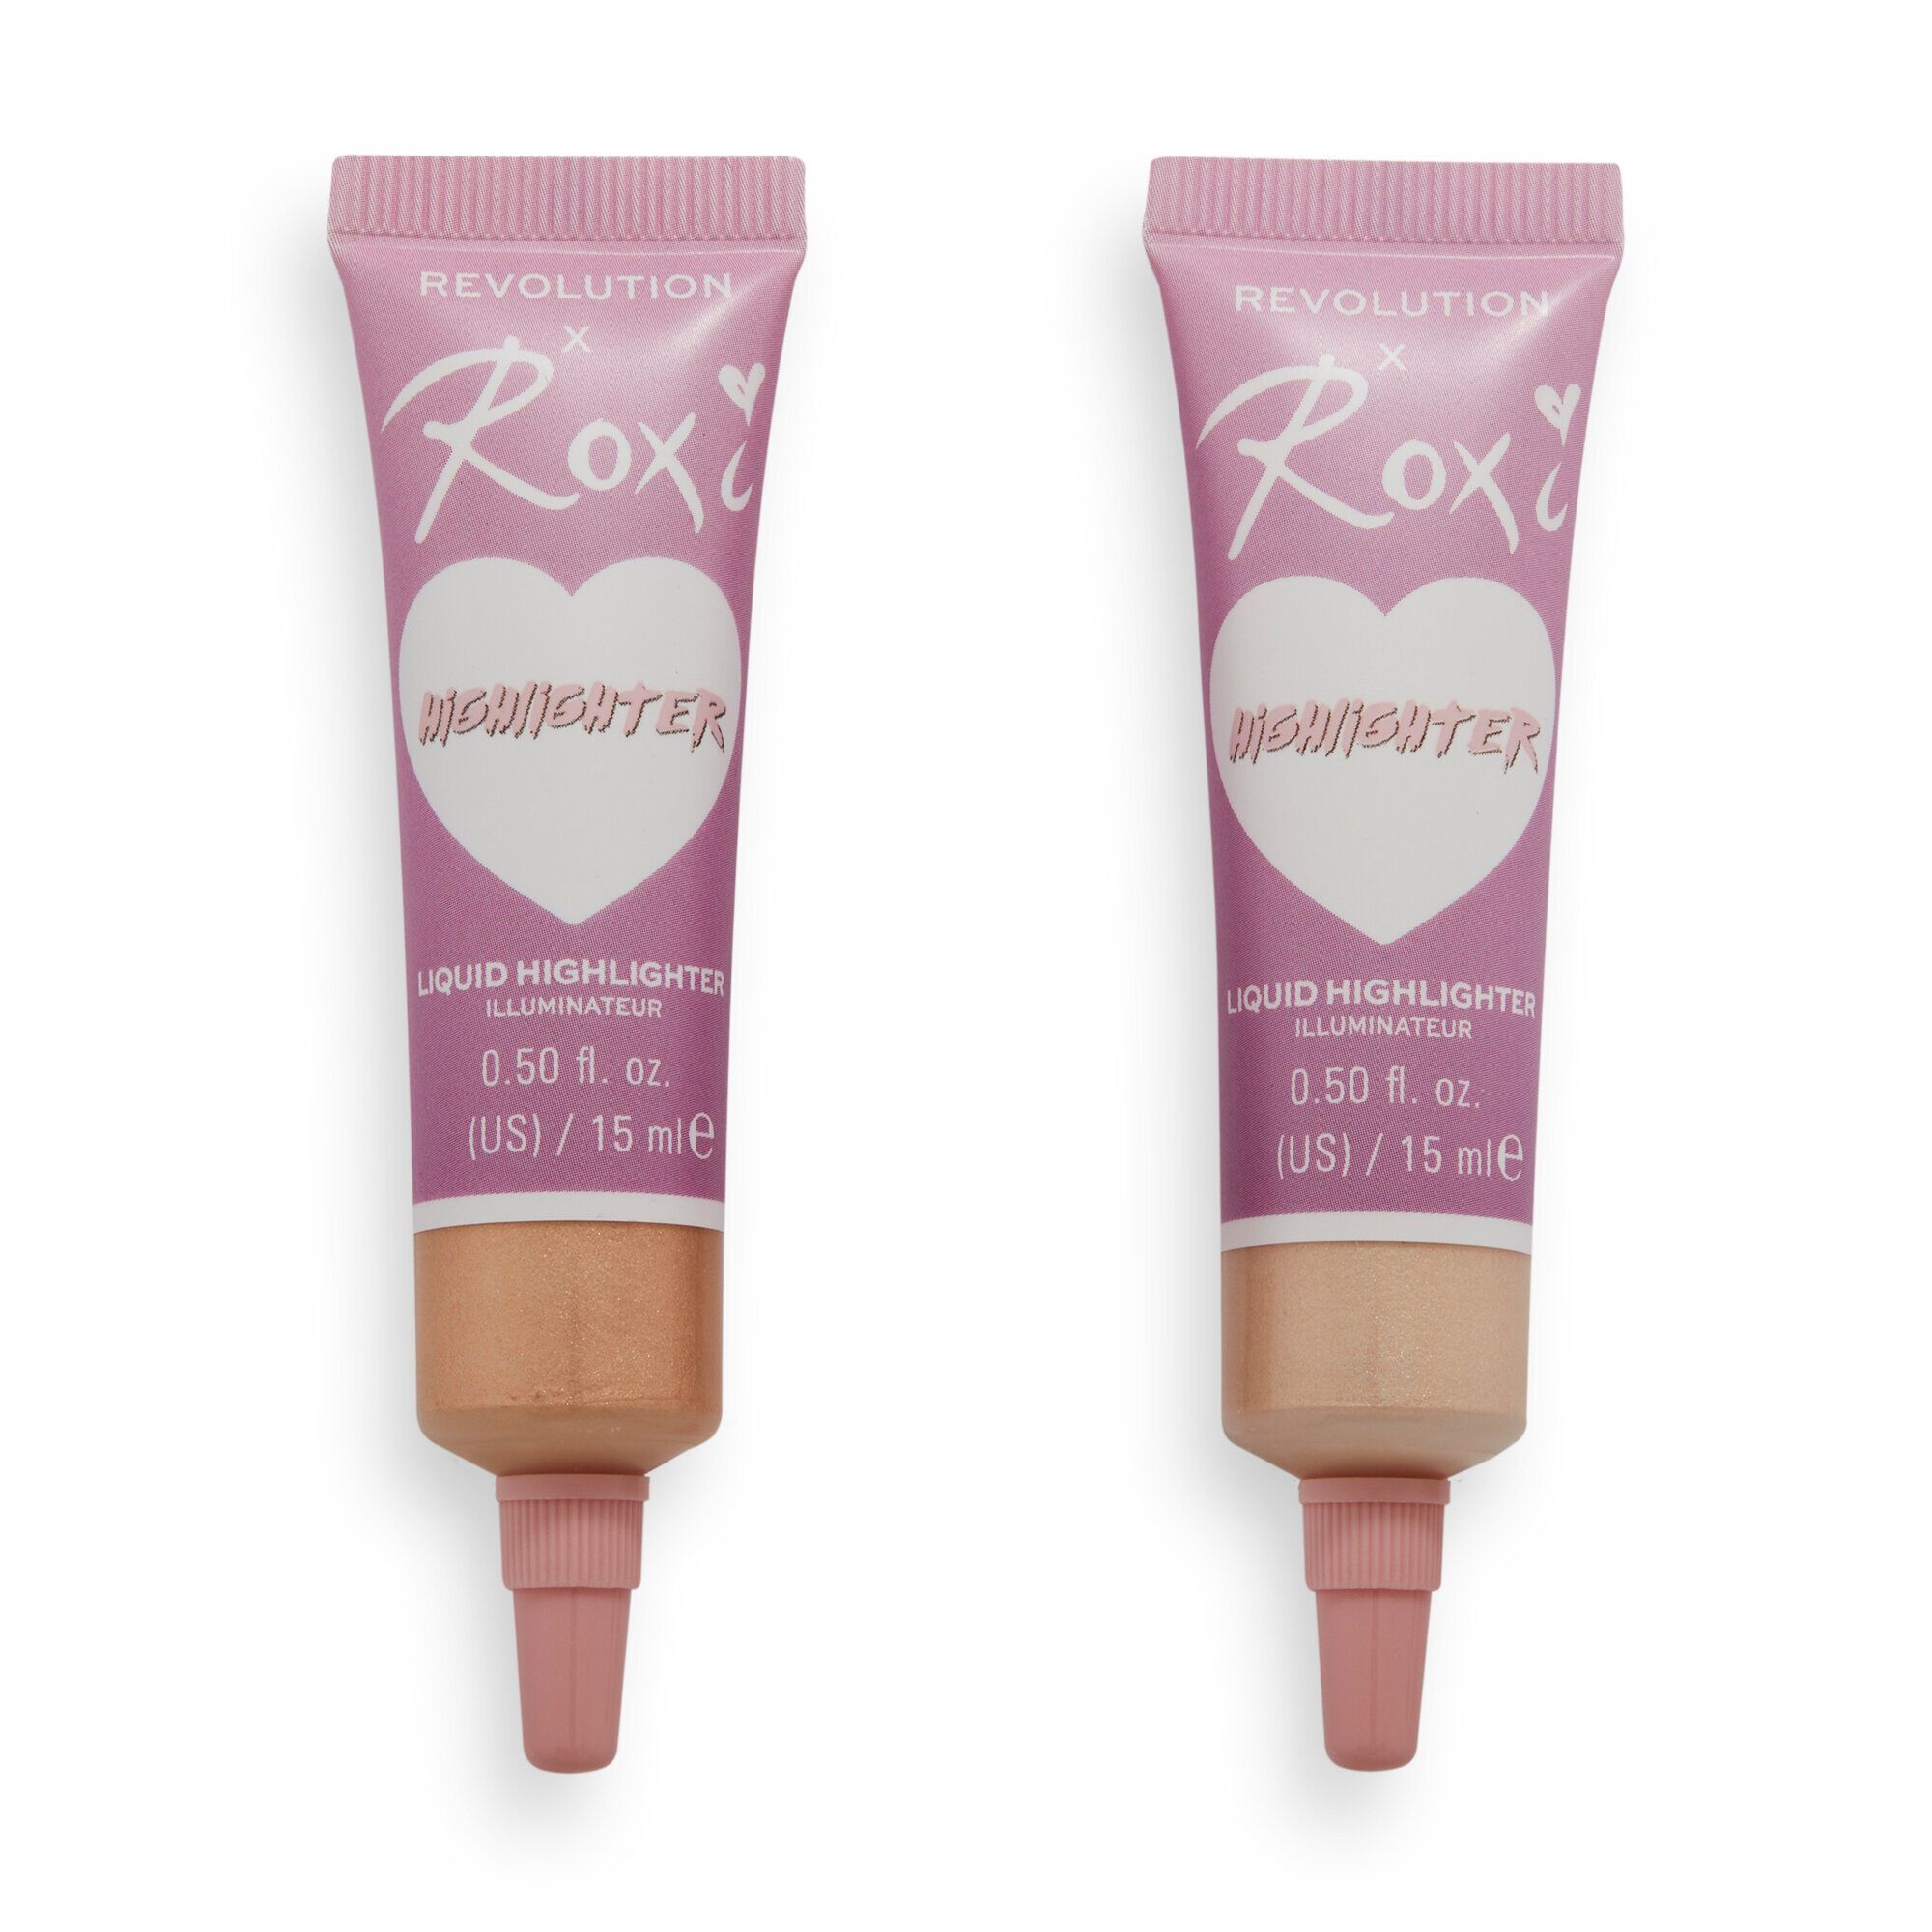 Makeup Revolution X Roxi Liquid Highlighter Duo